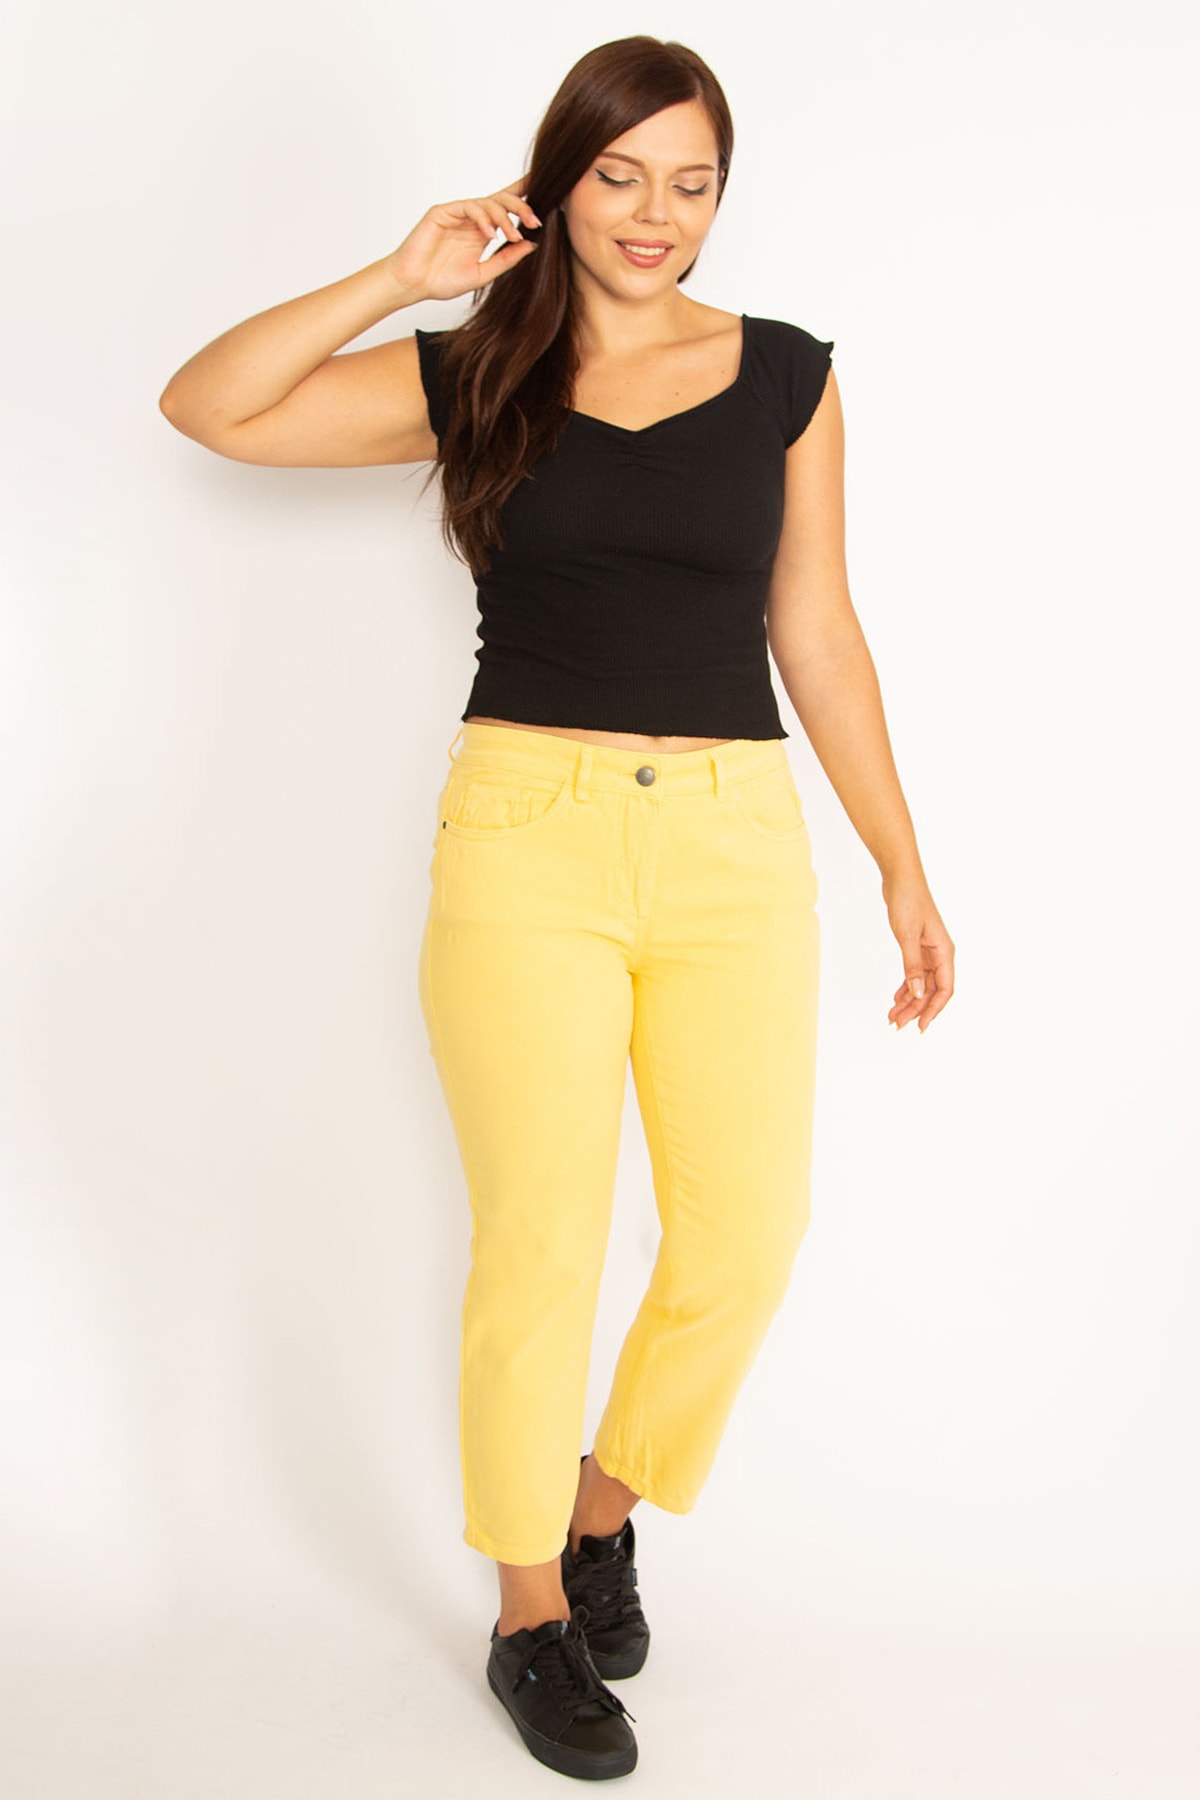 Şans Women's Large Size Yellow 5 Pocket Jeans Trousers